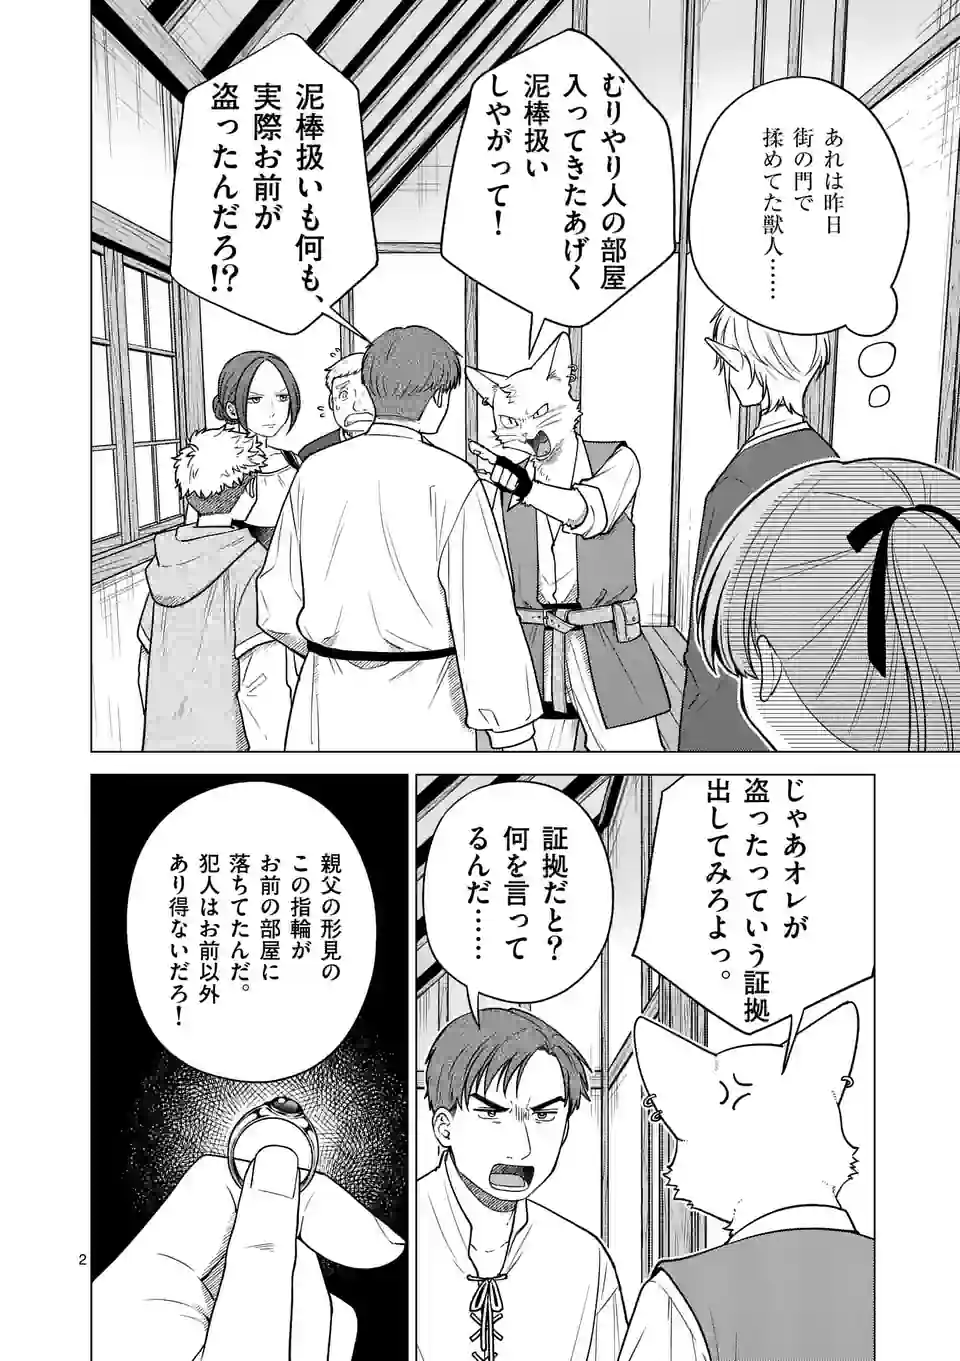 Isekai Pomeranian to Niji no Mofumofu Tabi - Chapter 5 - Page 2